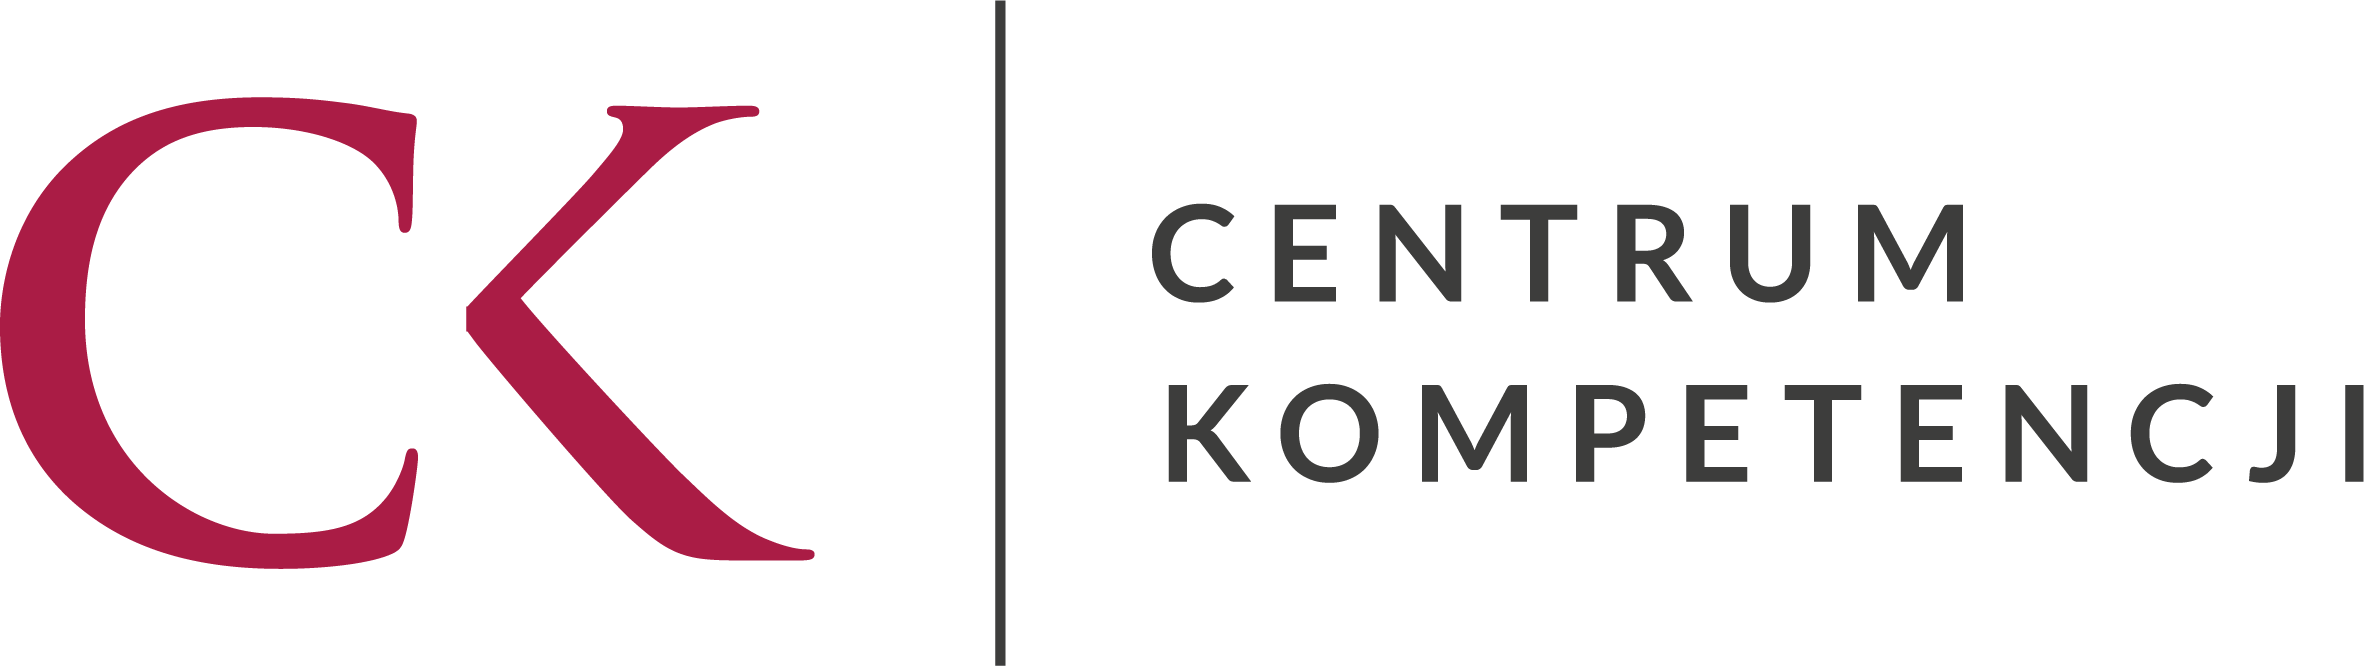 logo CK